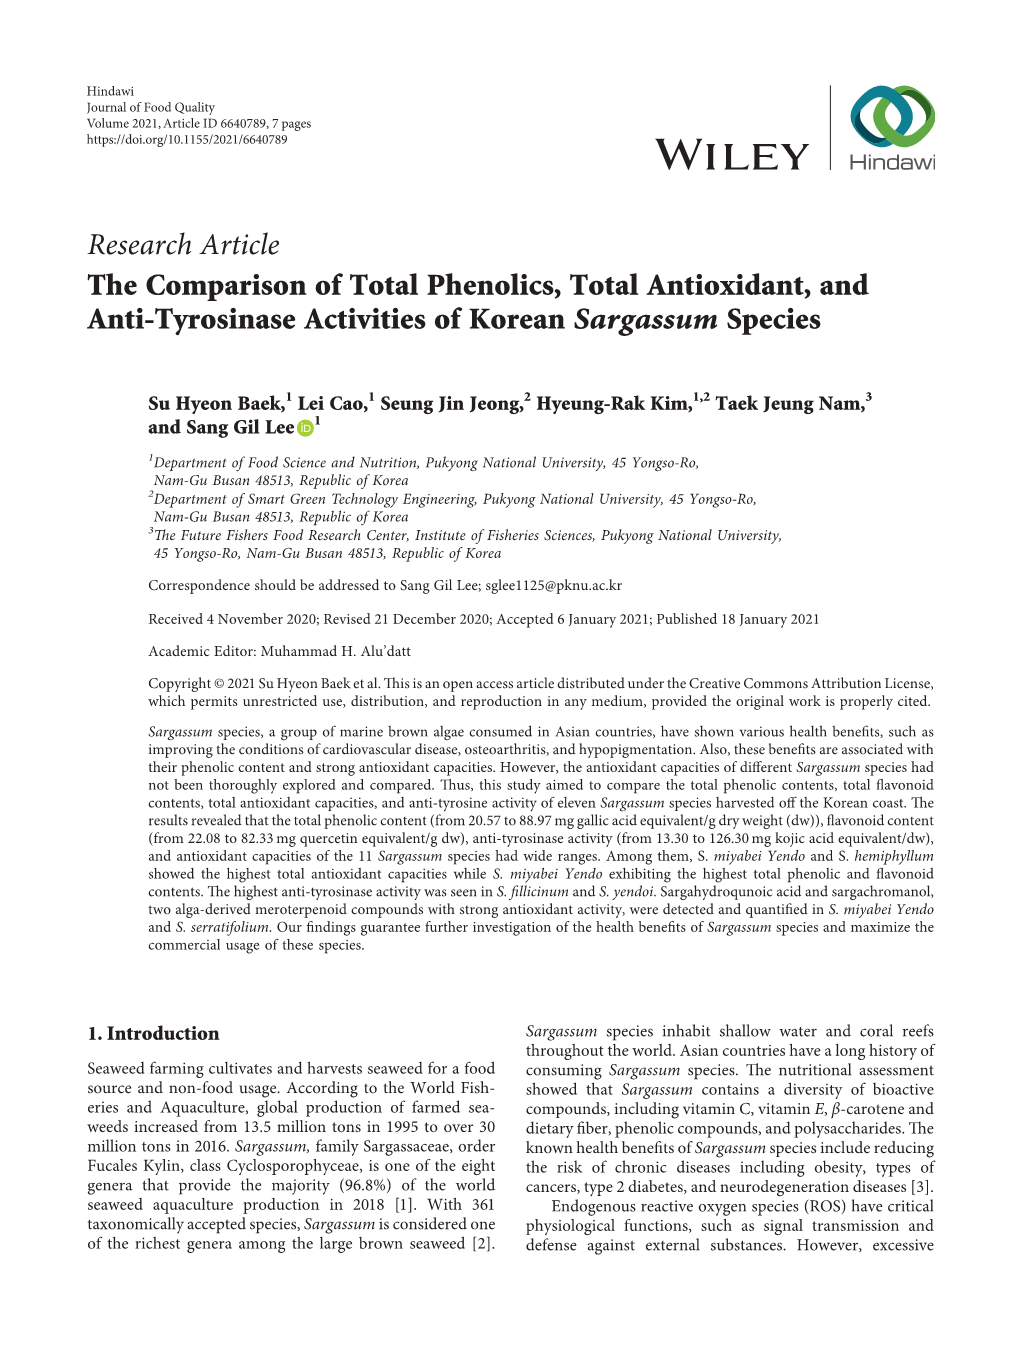 The Comparison of Total Phenolics, Total Antioxidant, and Anti-Tyrosinase Activities of Korean Sargassum Species